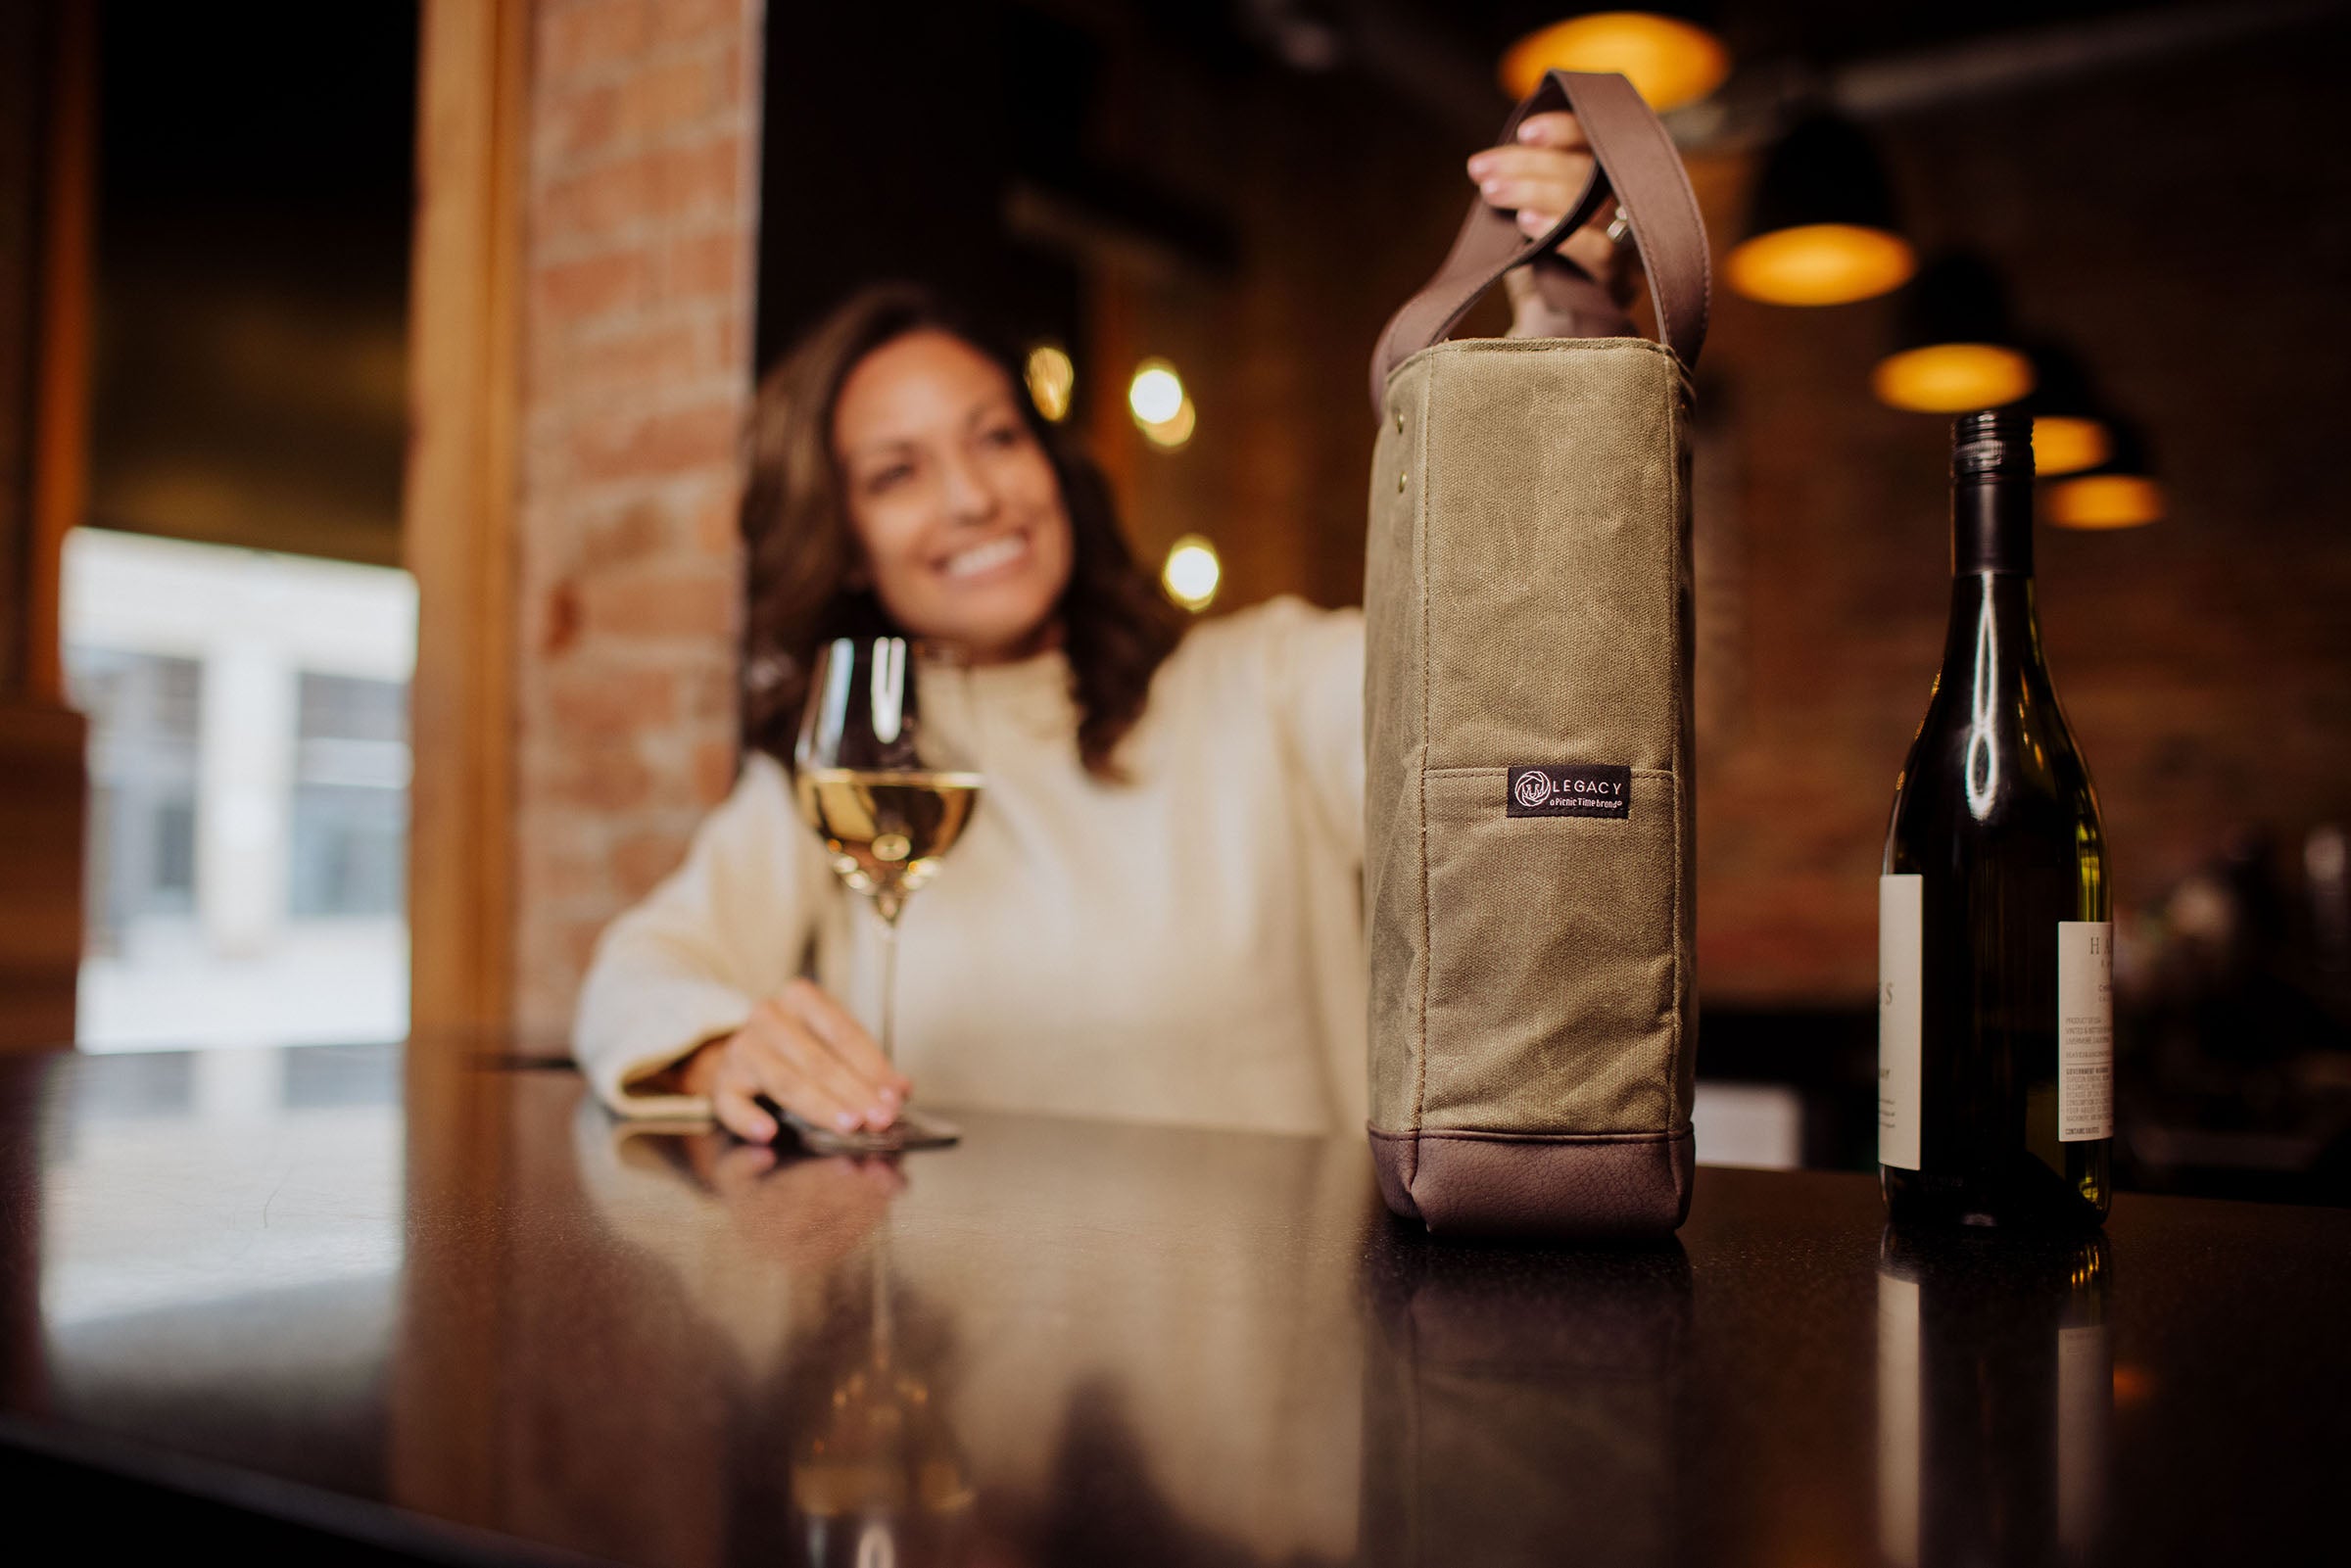 Philadelphia Phillies - 2 Bottle Insulated Wine Cooler Bag